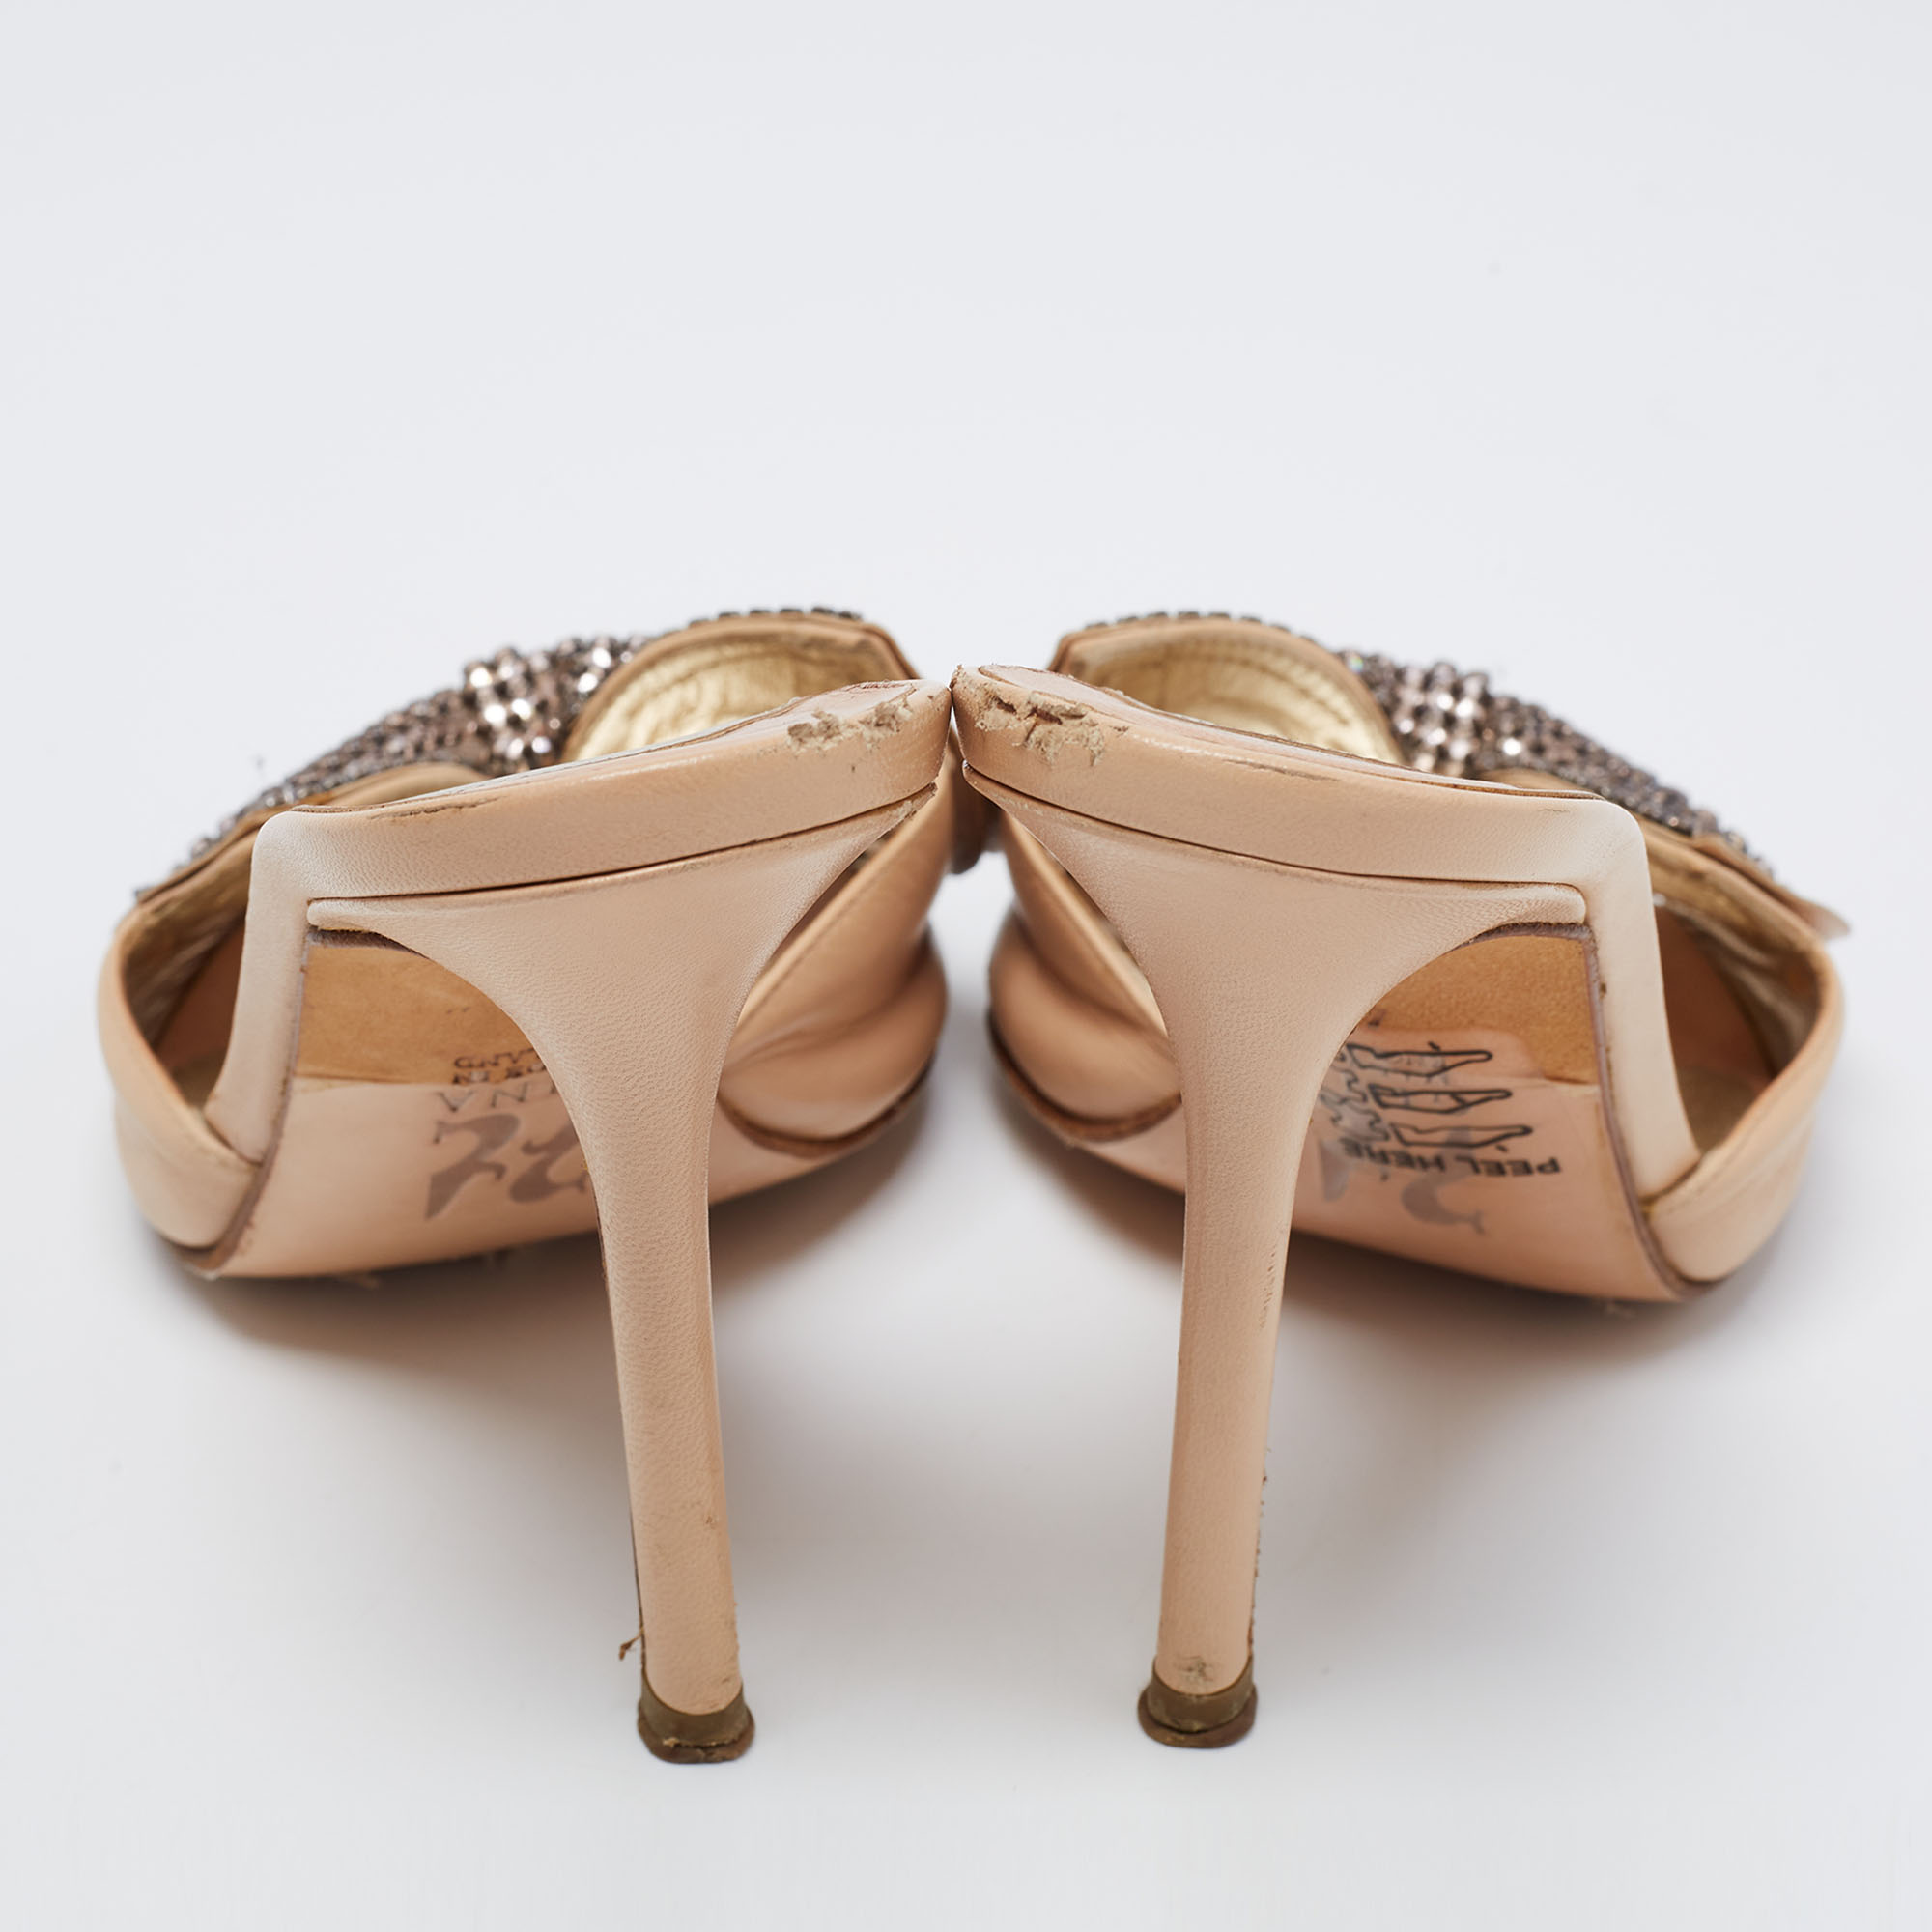 Gina Beige Leather Crystal Embellished Bow Open Toe Sandals Size 37